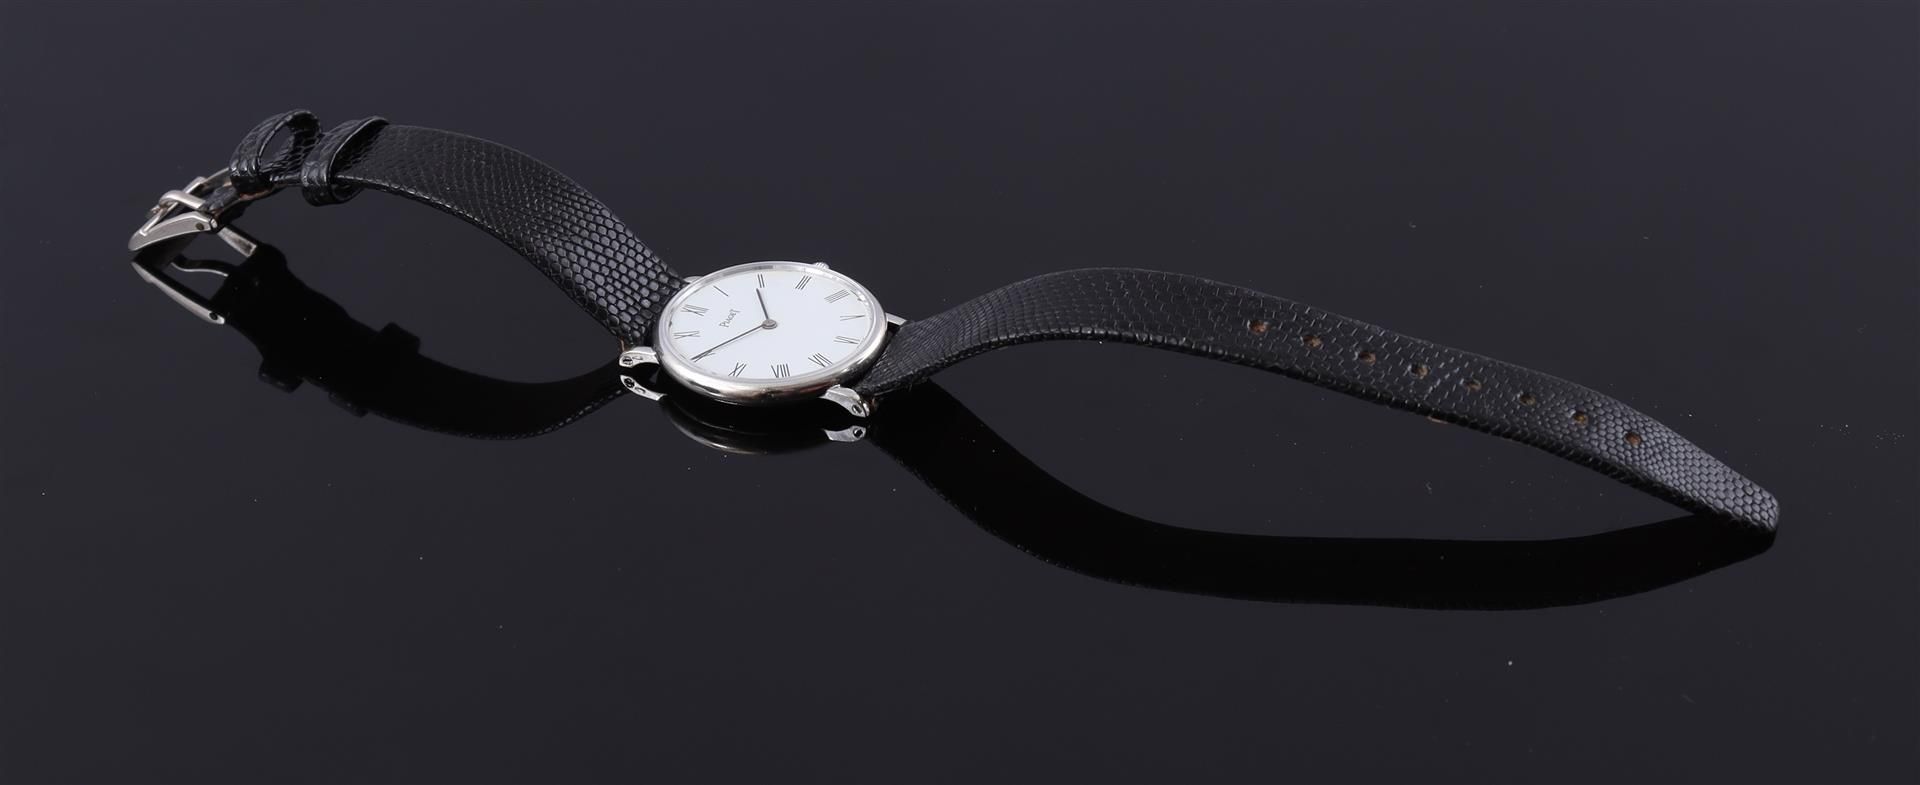 Piaget Swiss wristwatch - Image 2 of 2